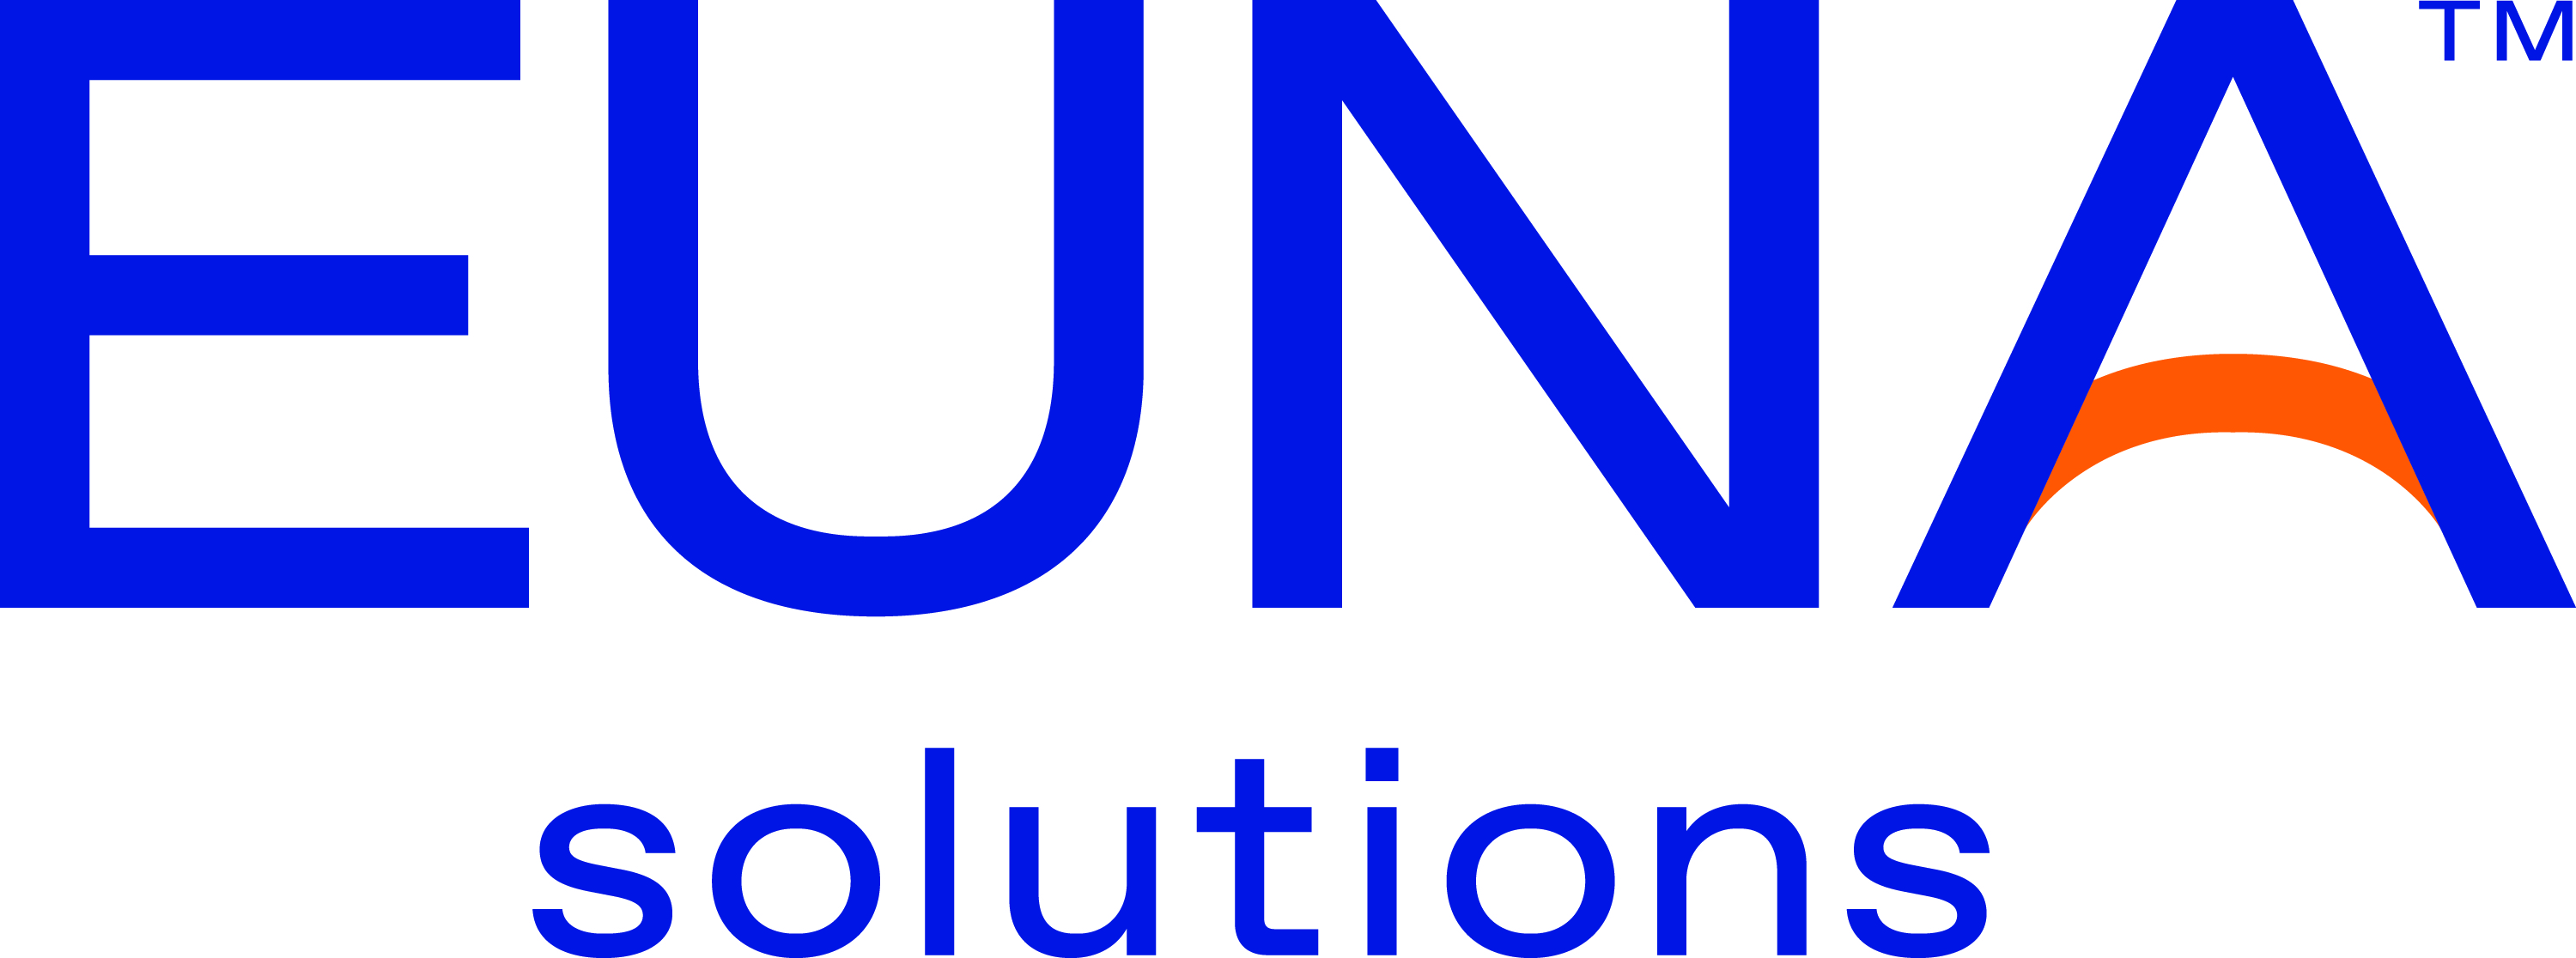 Euna Solutions logo